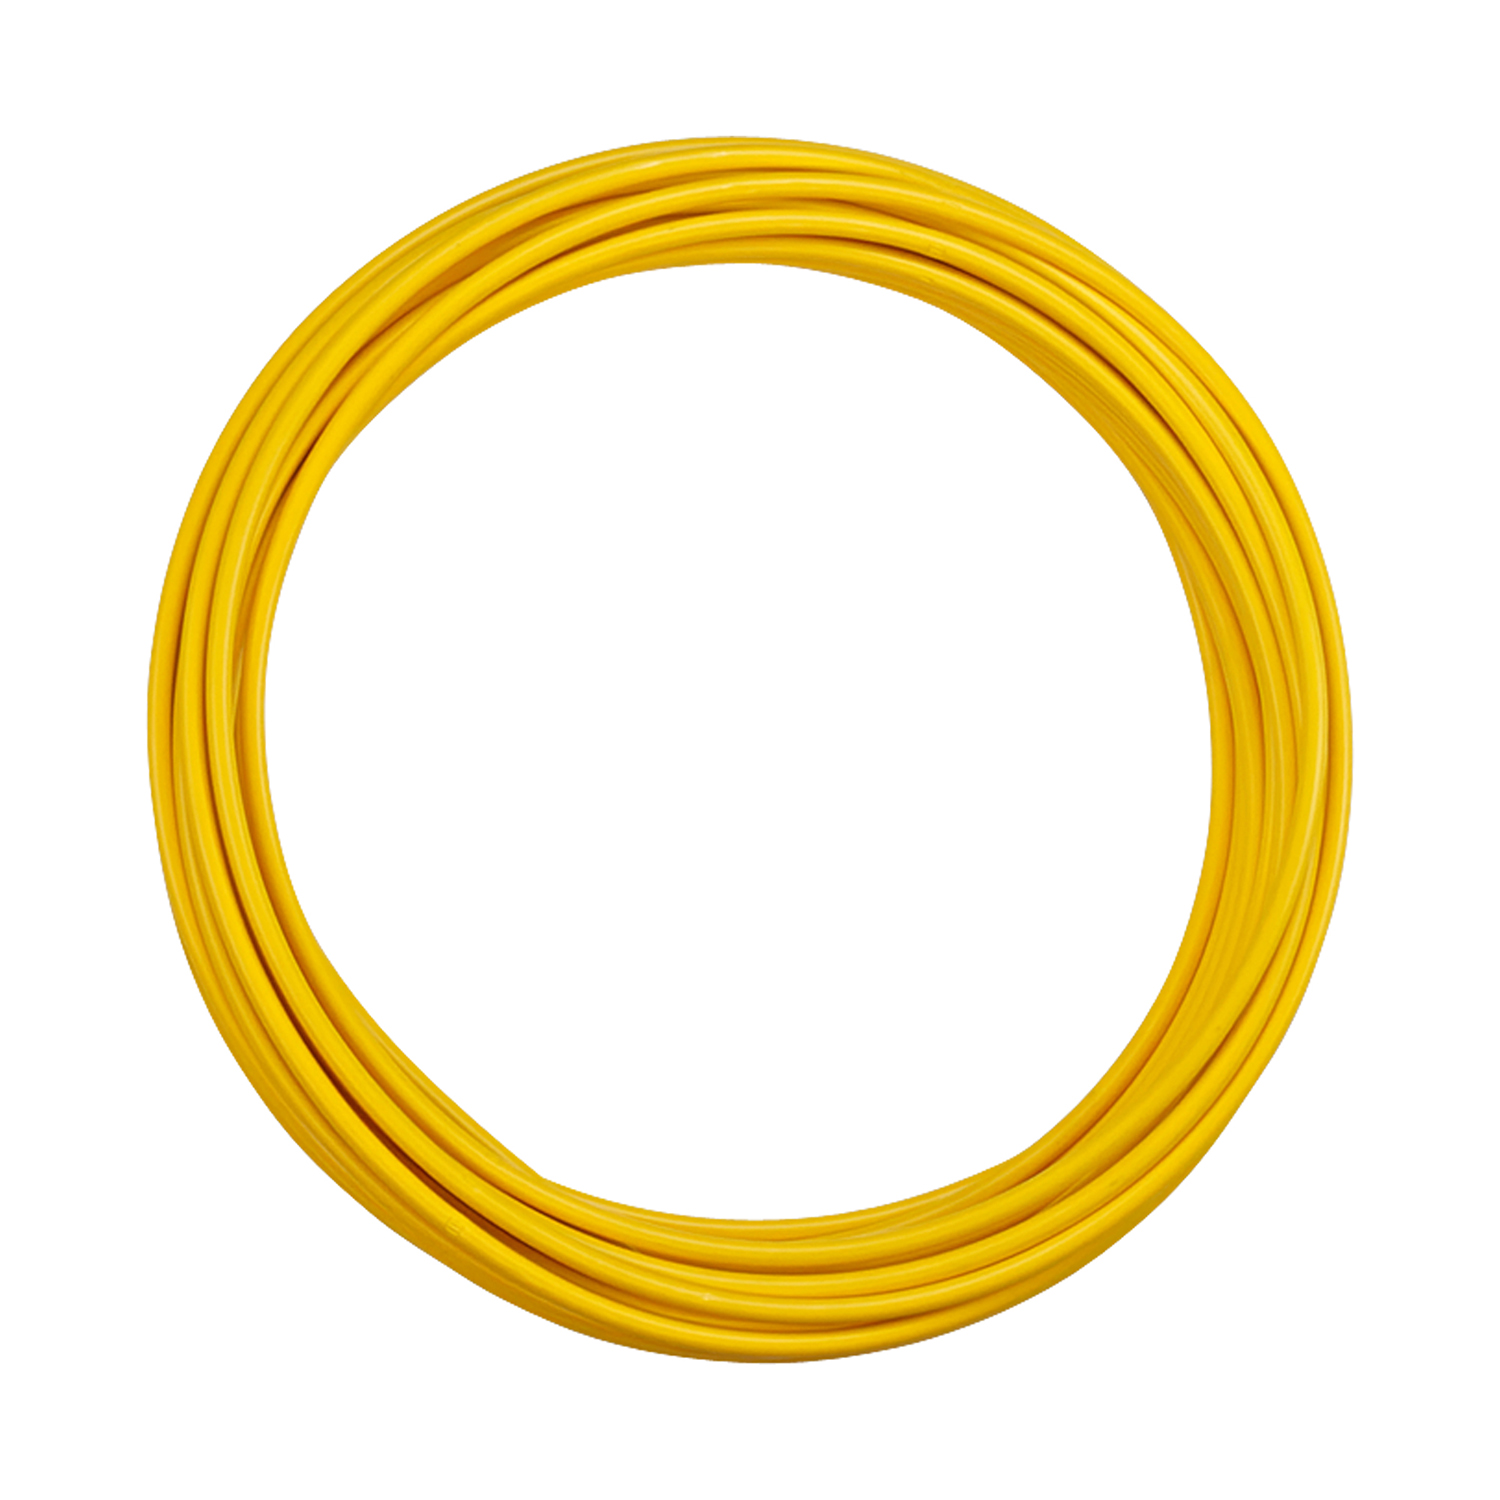 BREMS-Hülle 10 m-Rolle-DT11150010 in gelb, mit PE-HD-Innenliner